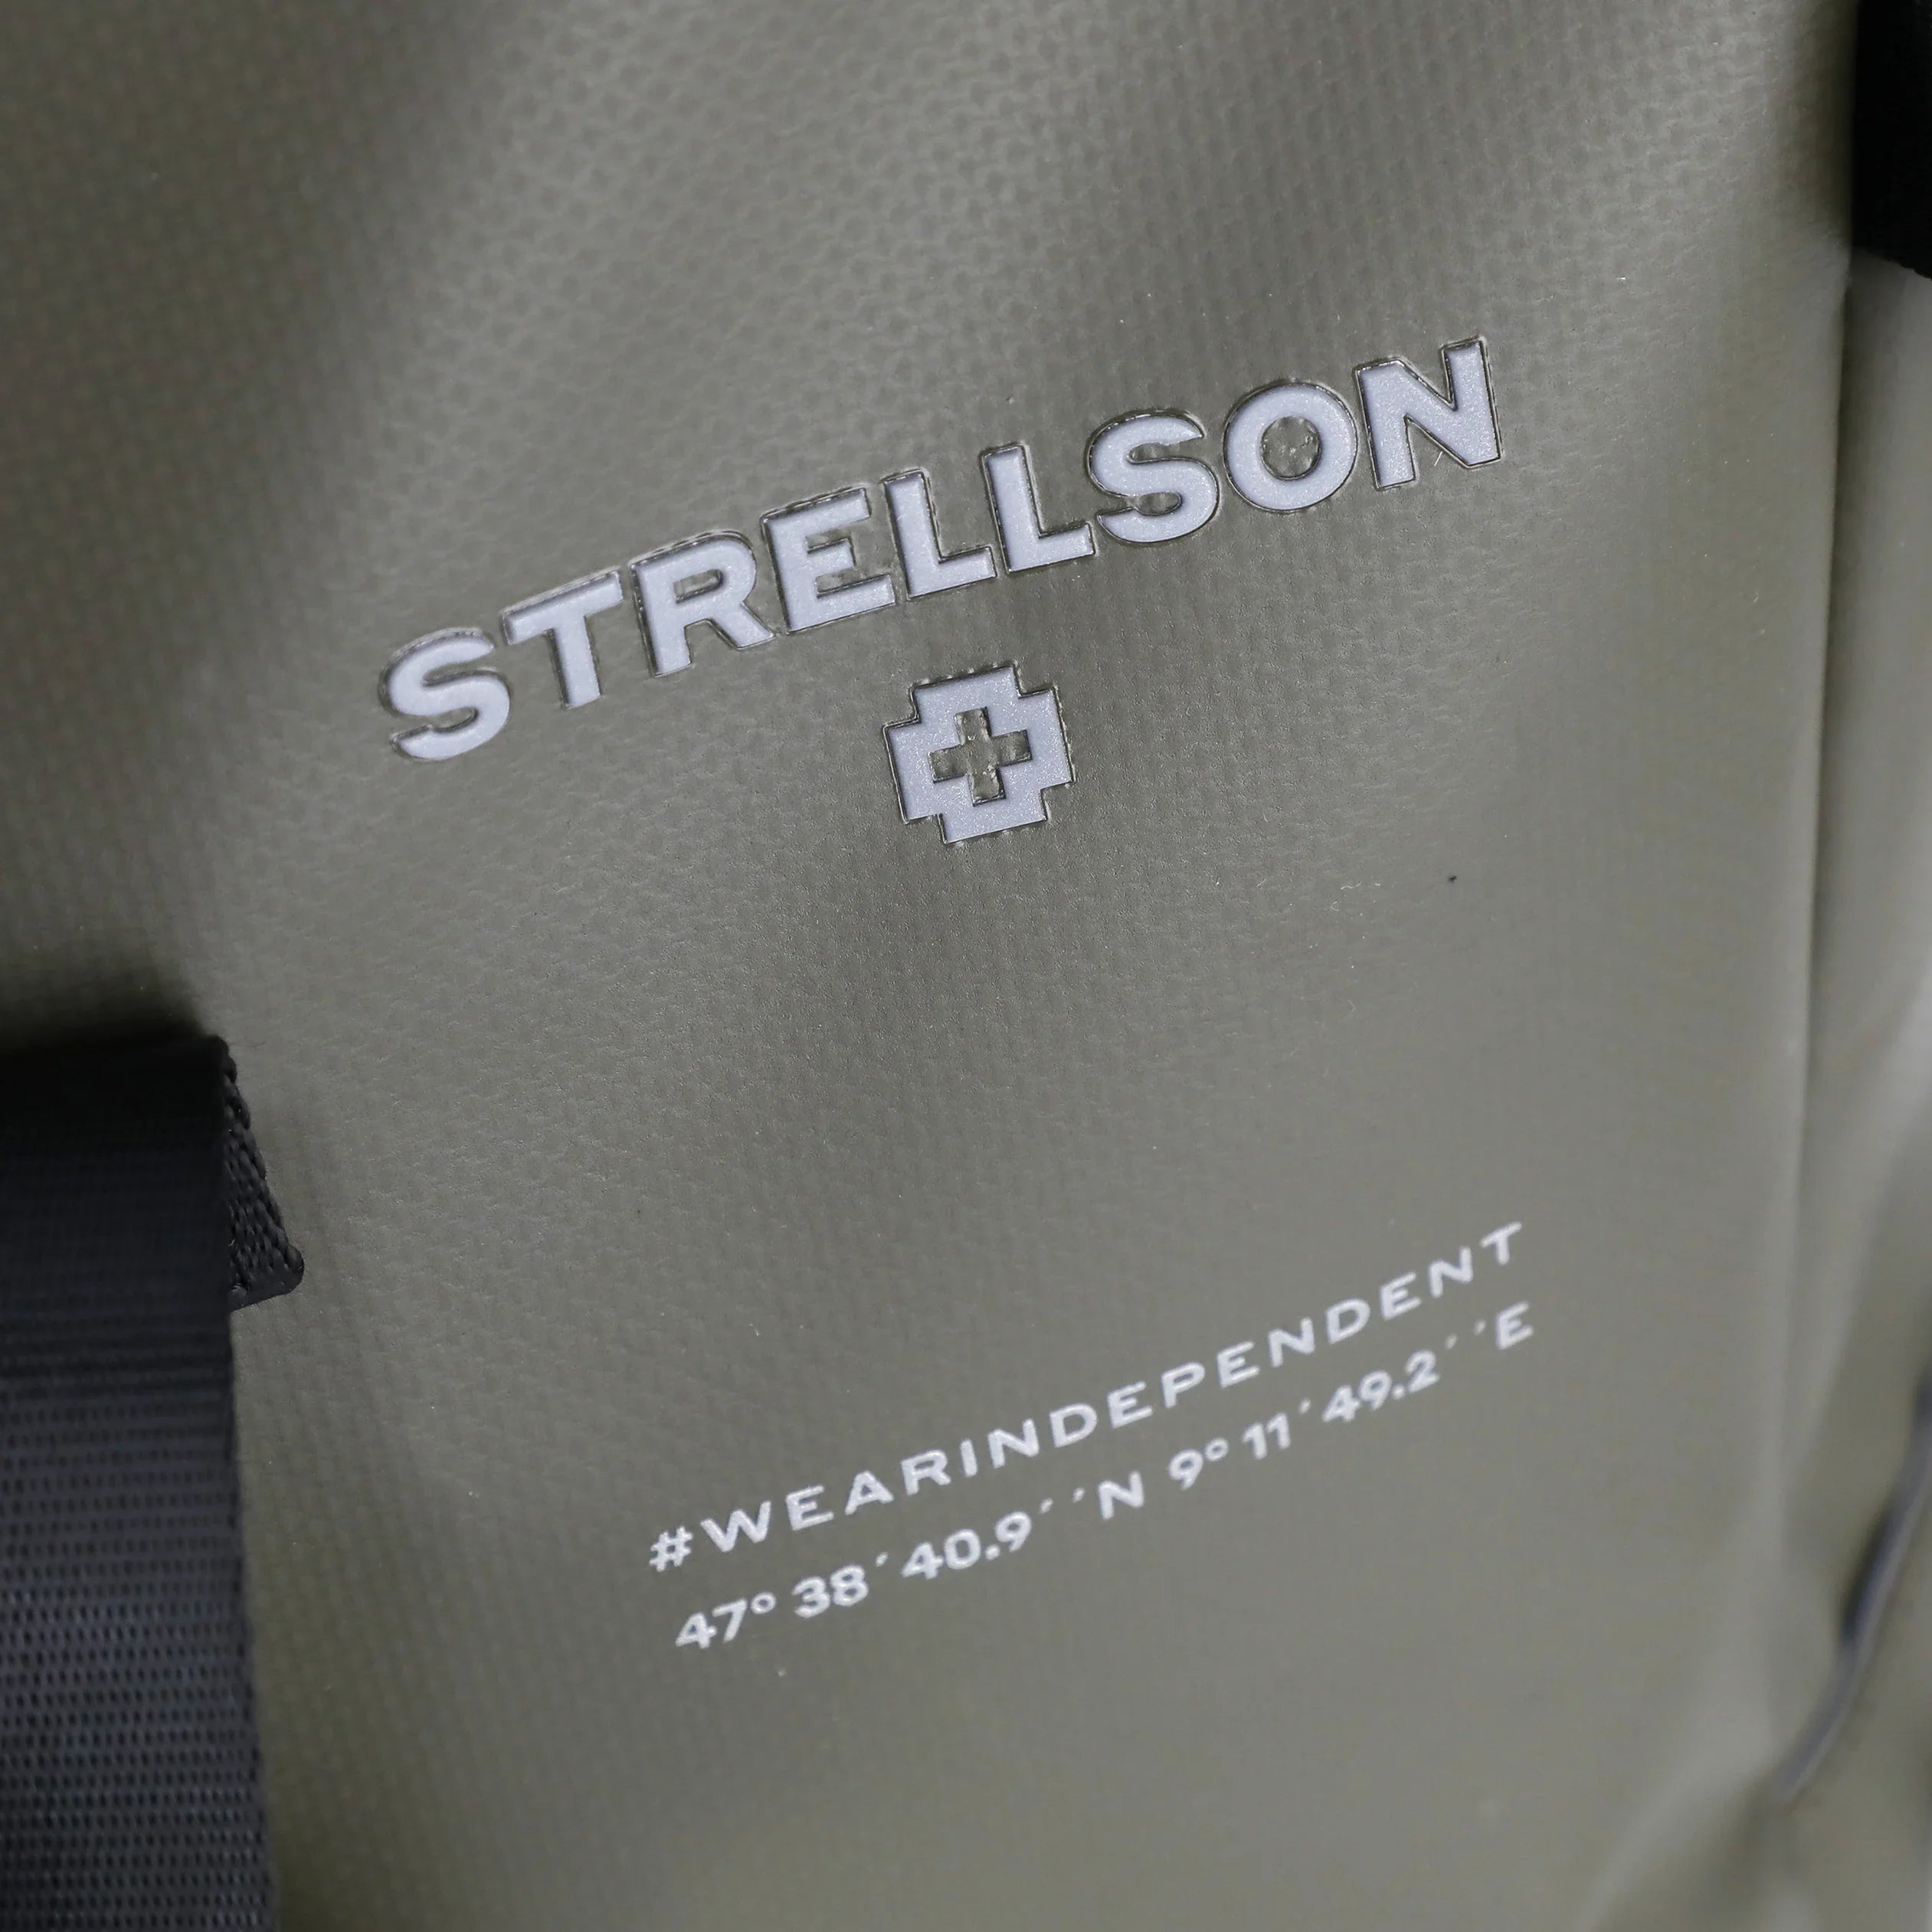 Strellson Stockwell 2.0 Sac à Dos MVF 47 cm - Noir